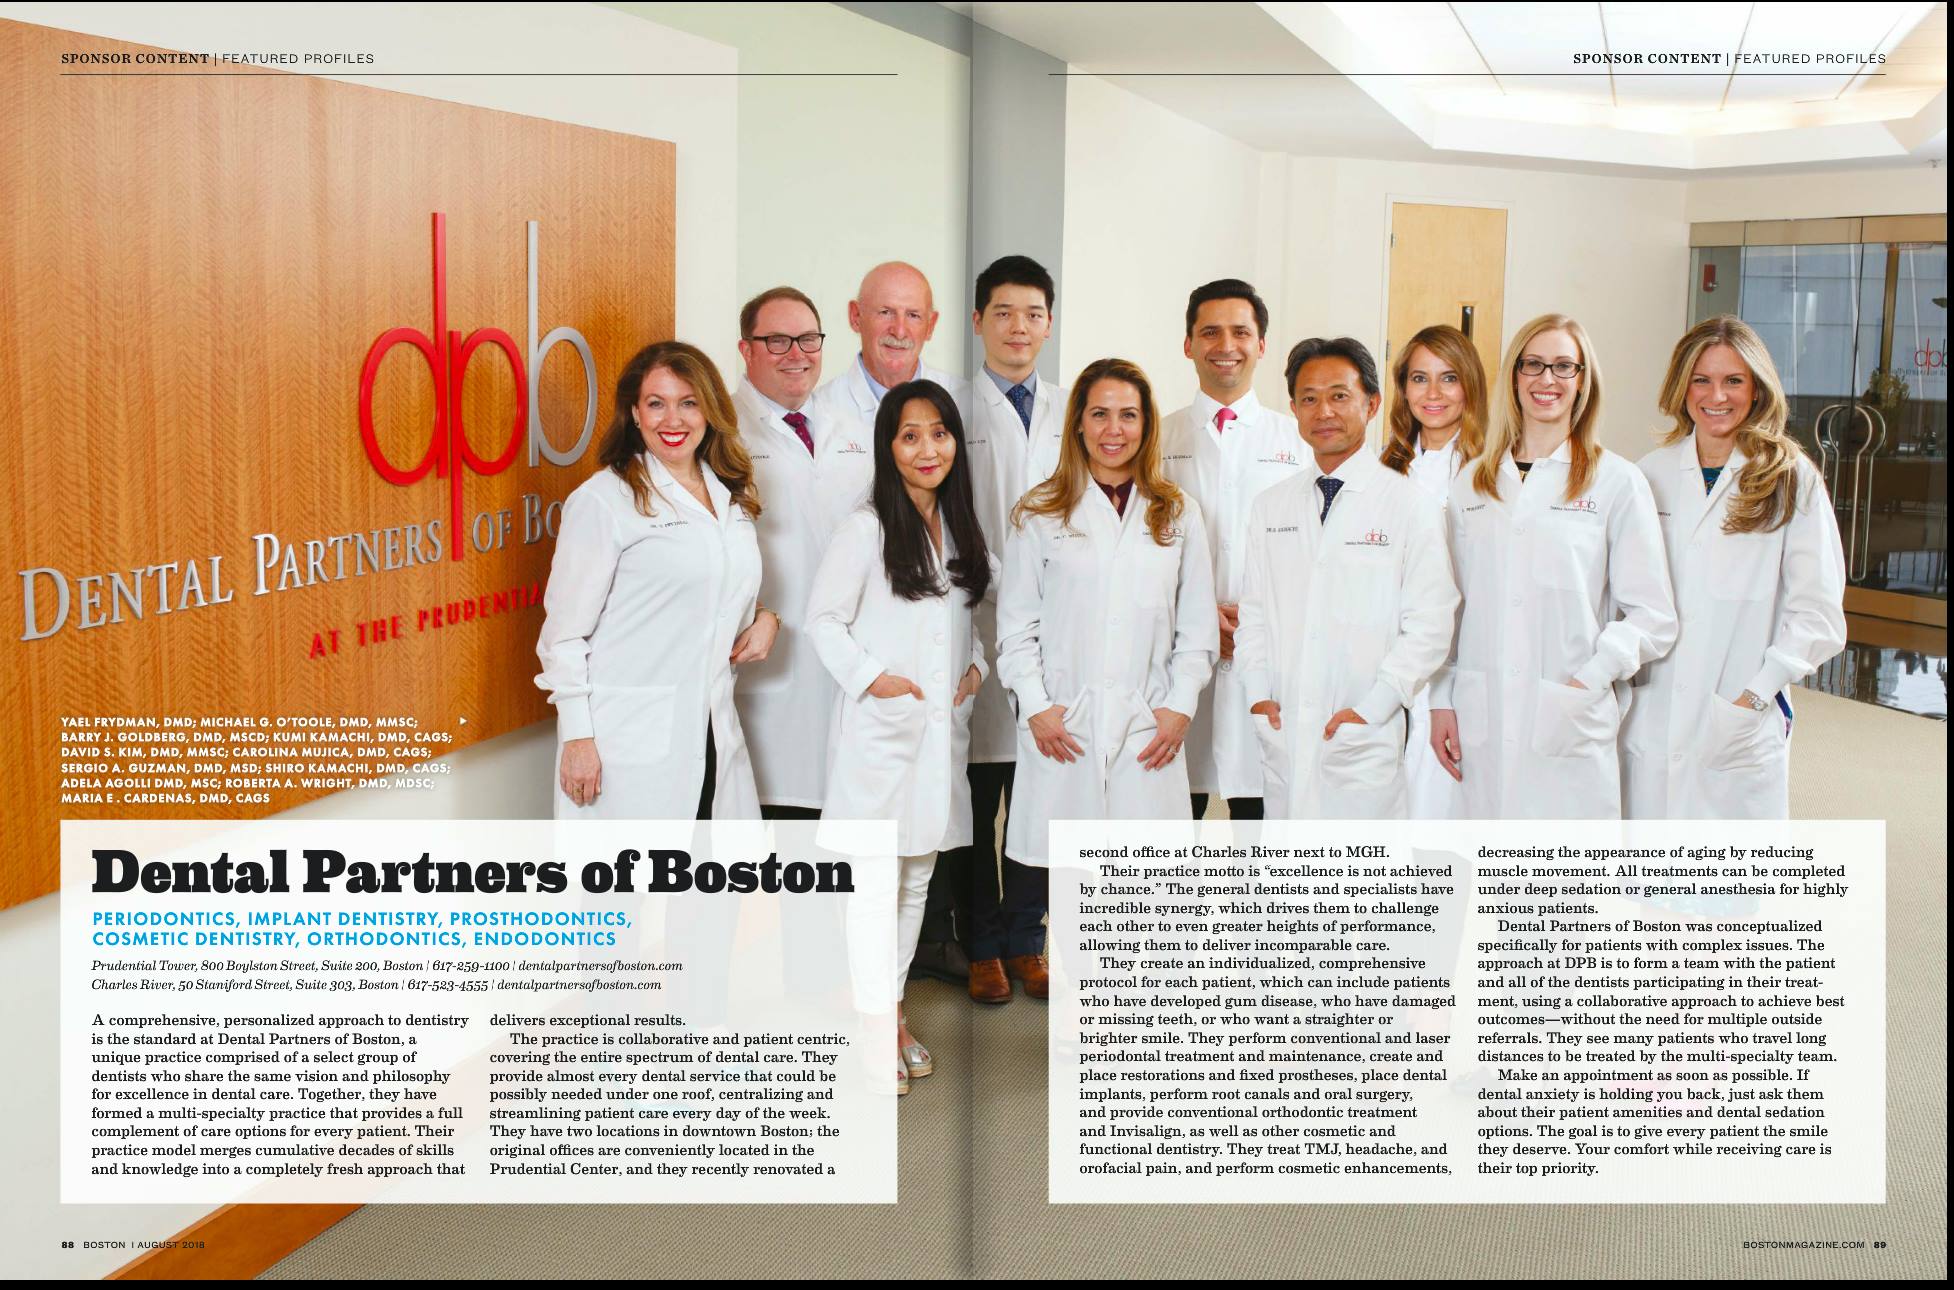 Boston Magazine's Article on Dental Partners of Boston